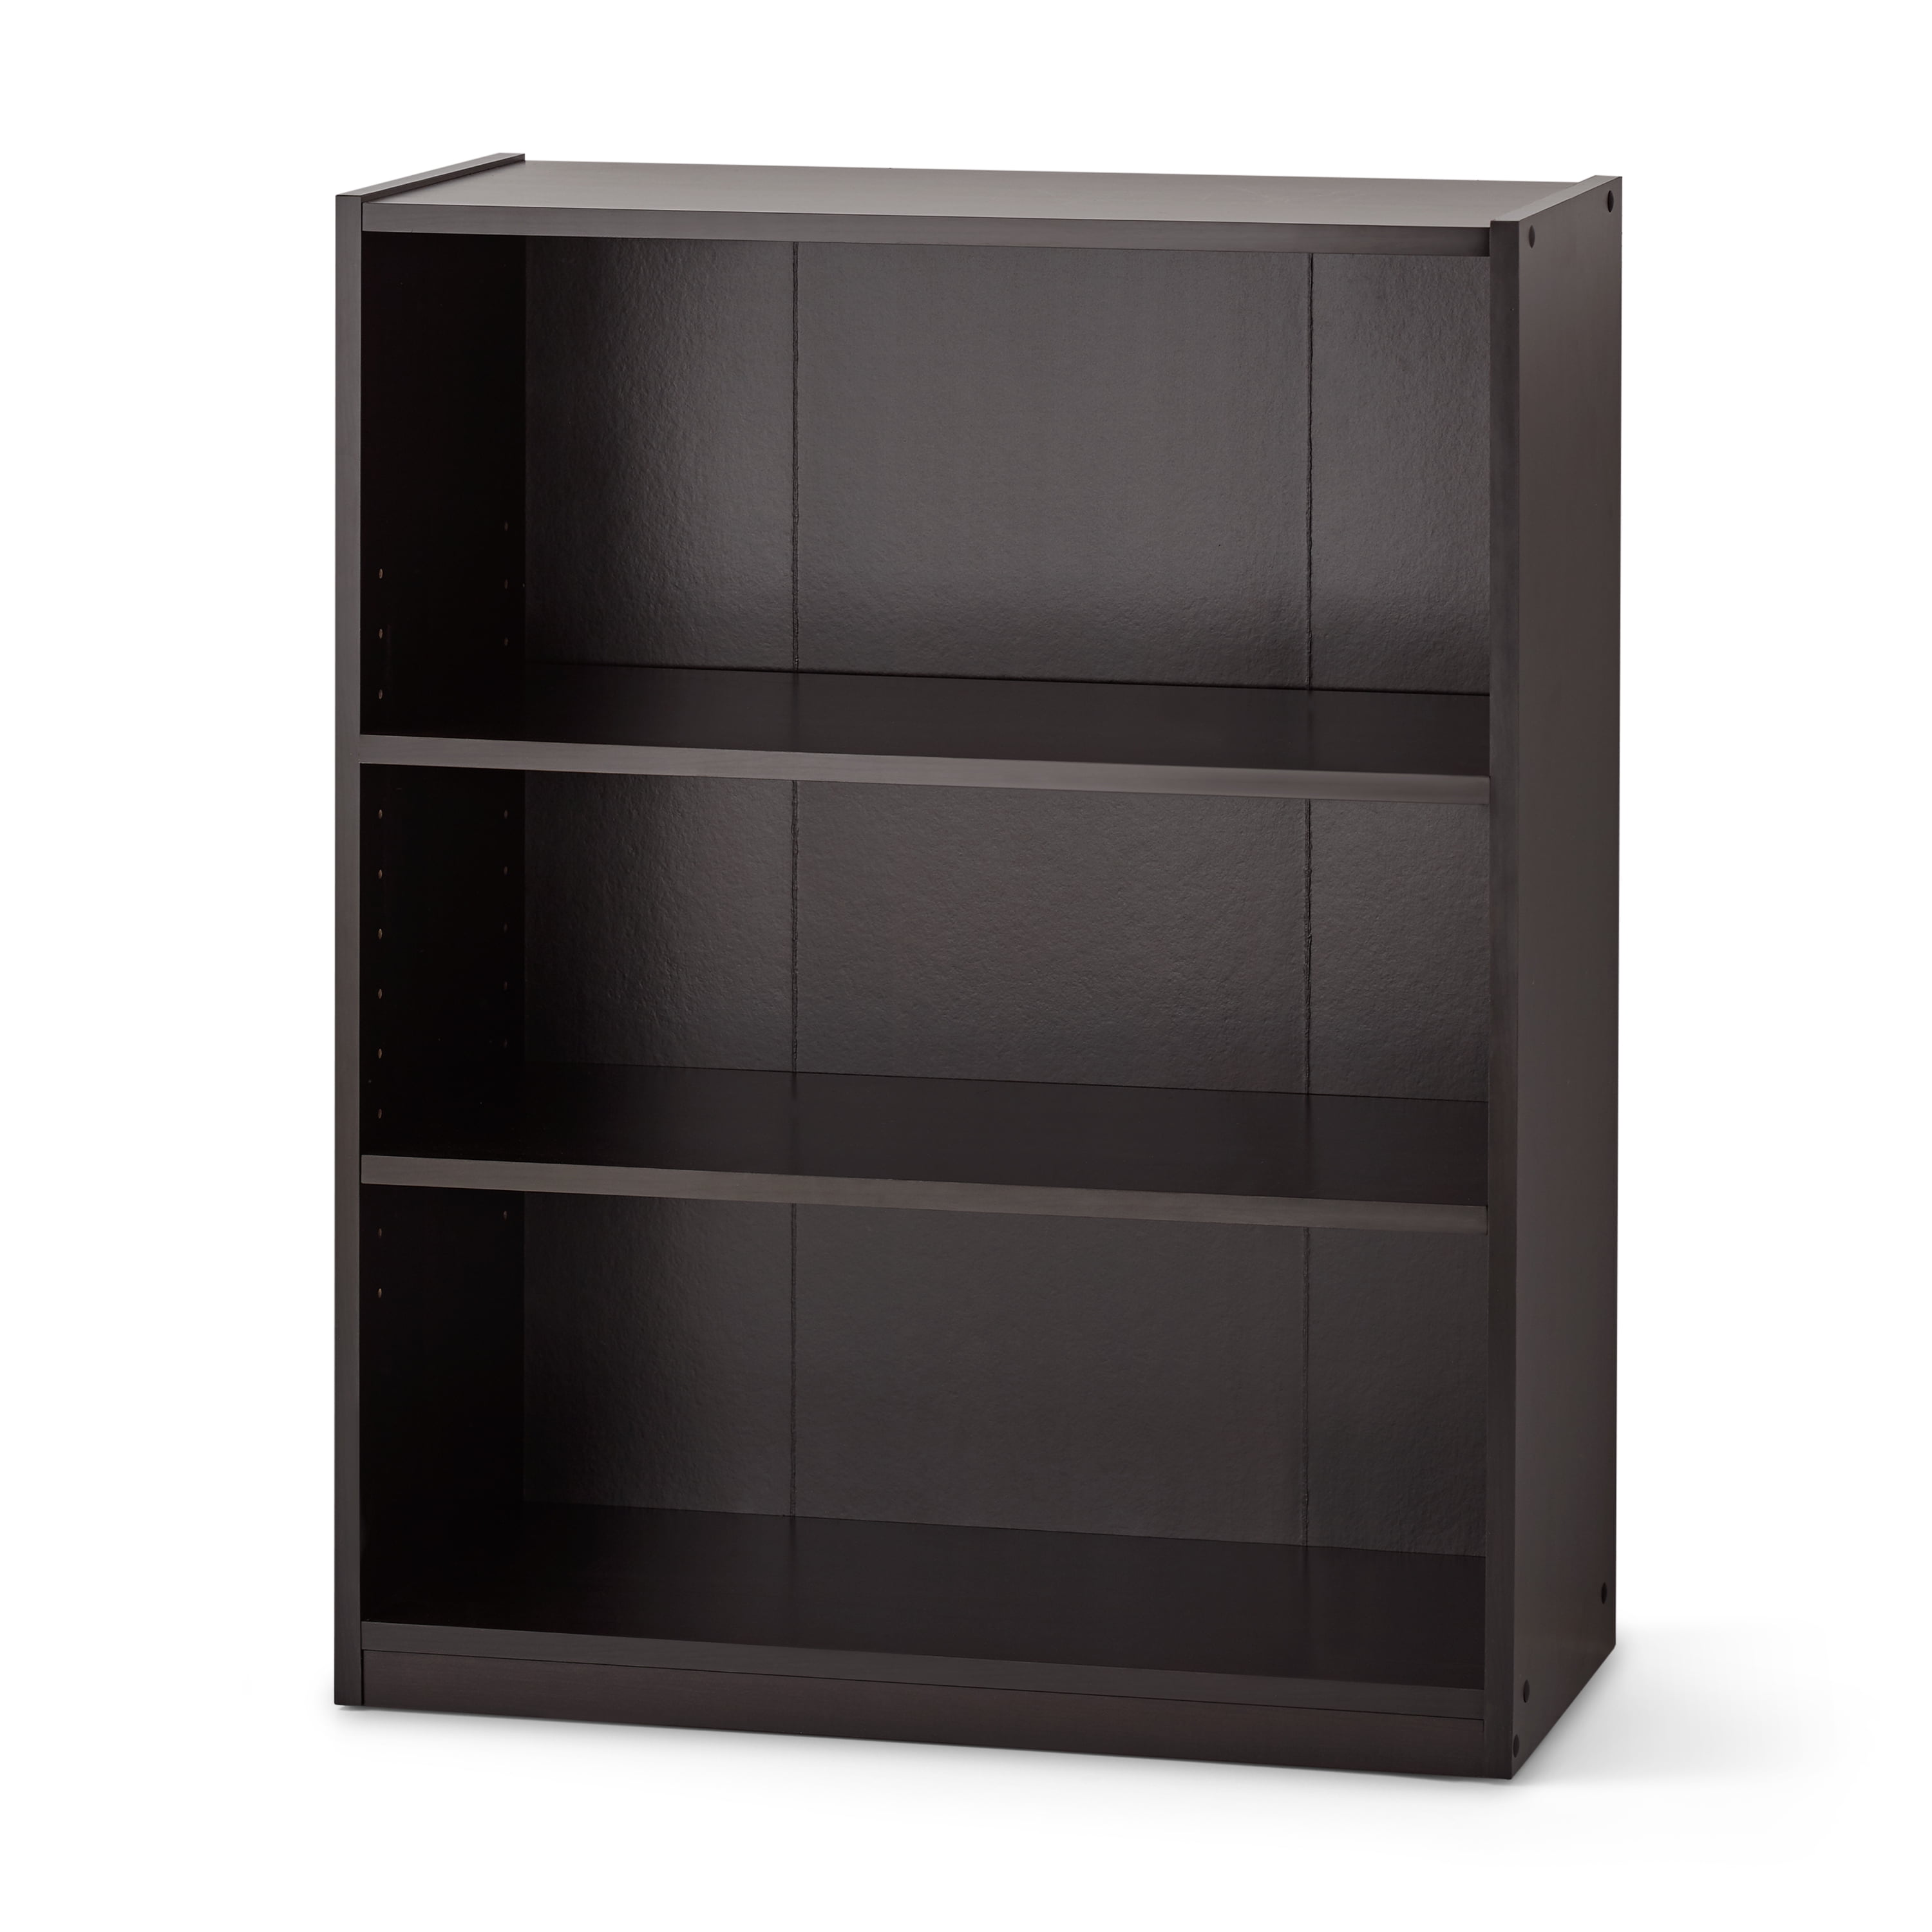 3 Shelf Bookcase Wood Etagere Folding Stackable Sleek Natural Finish Durable NEW